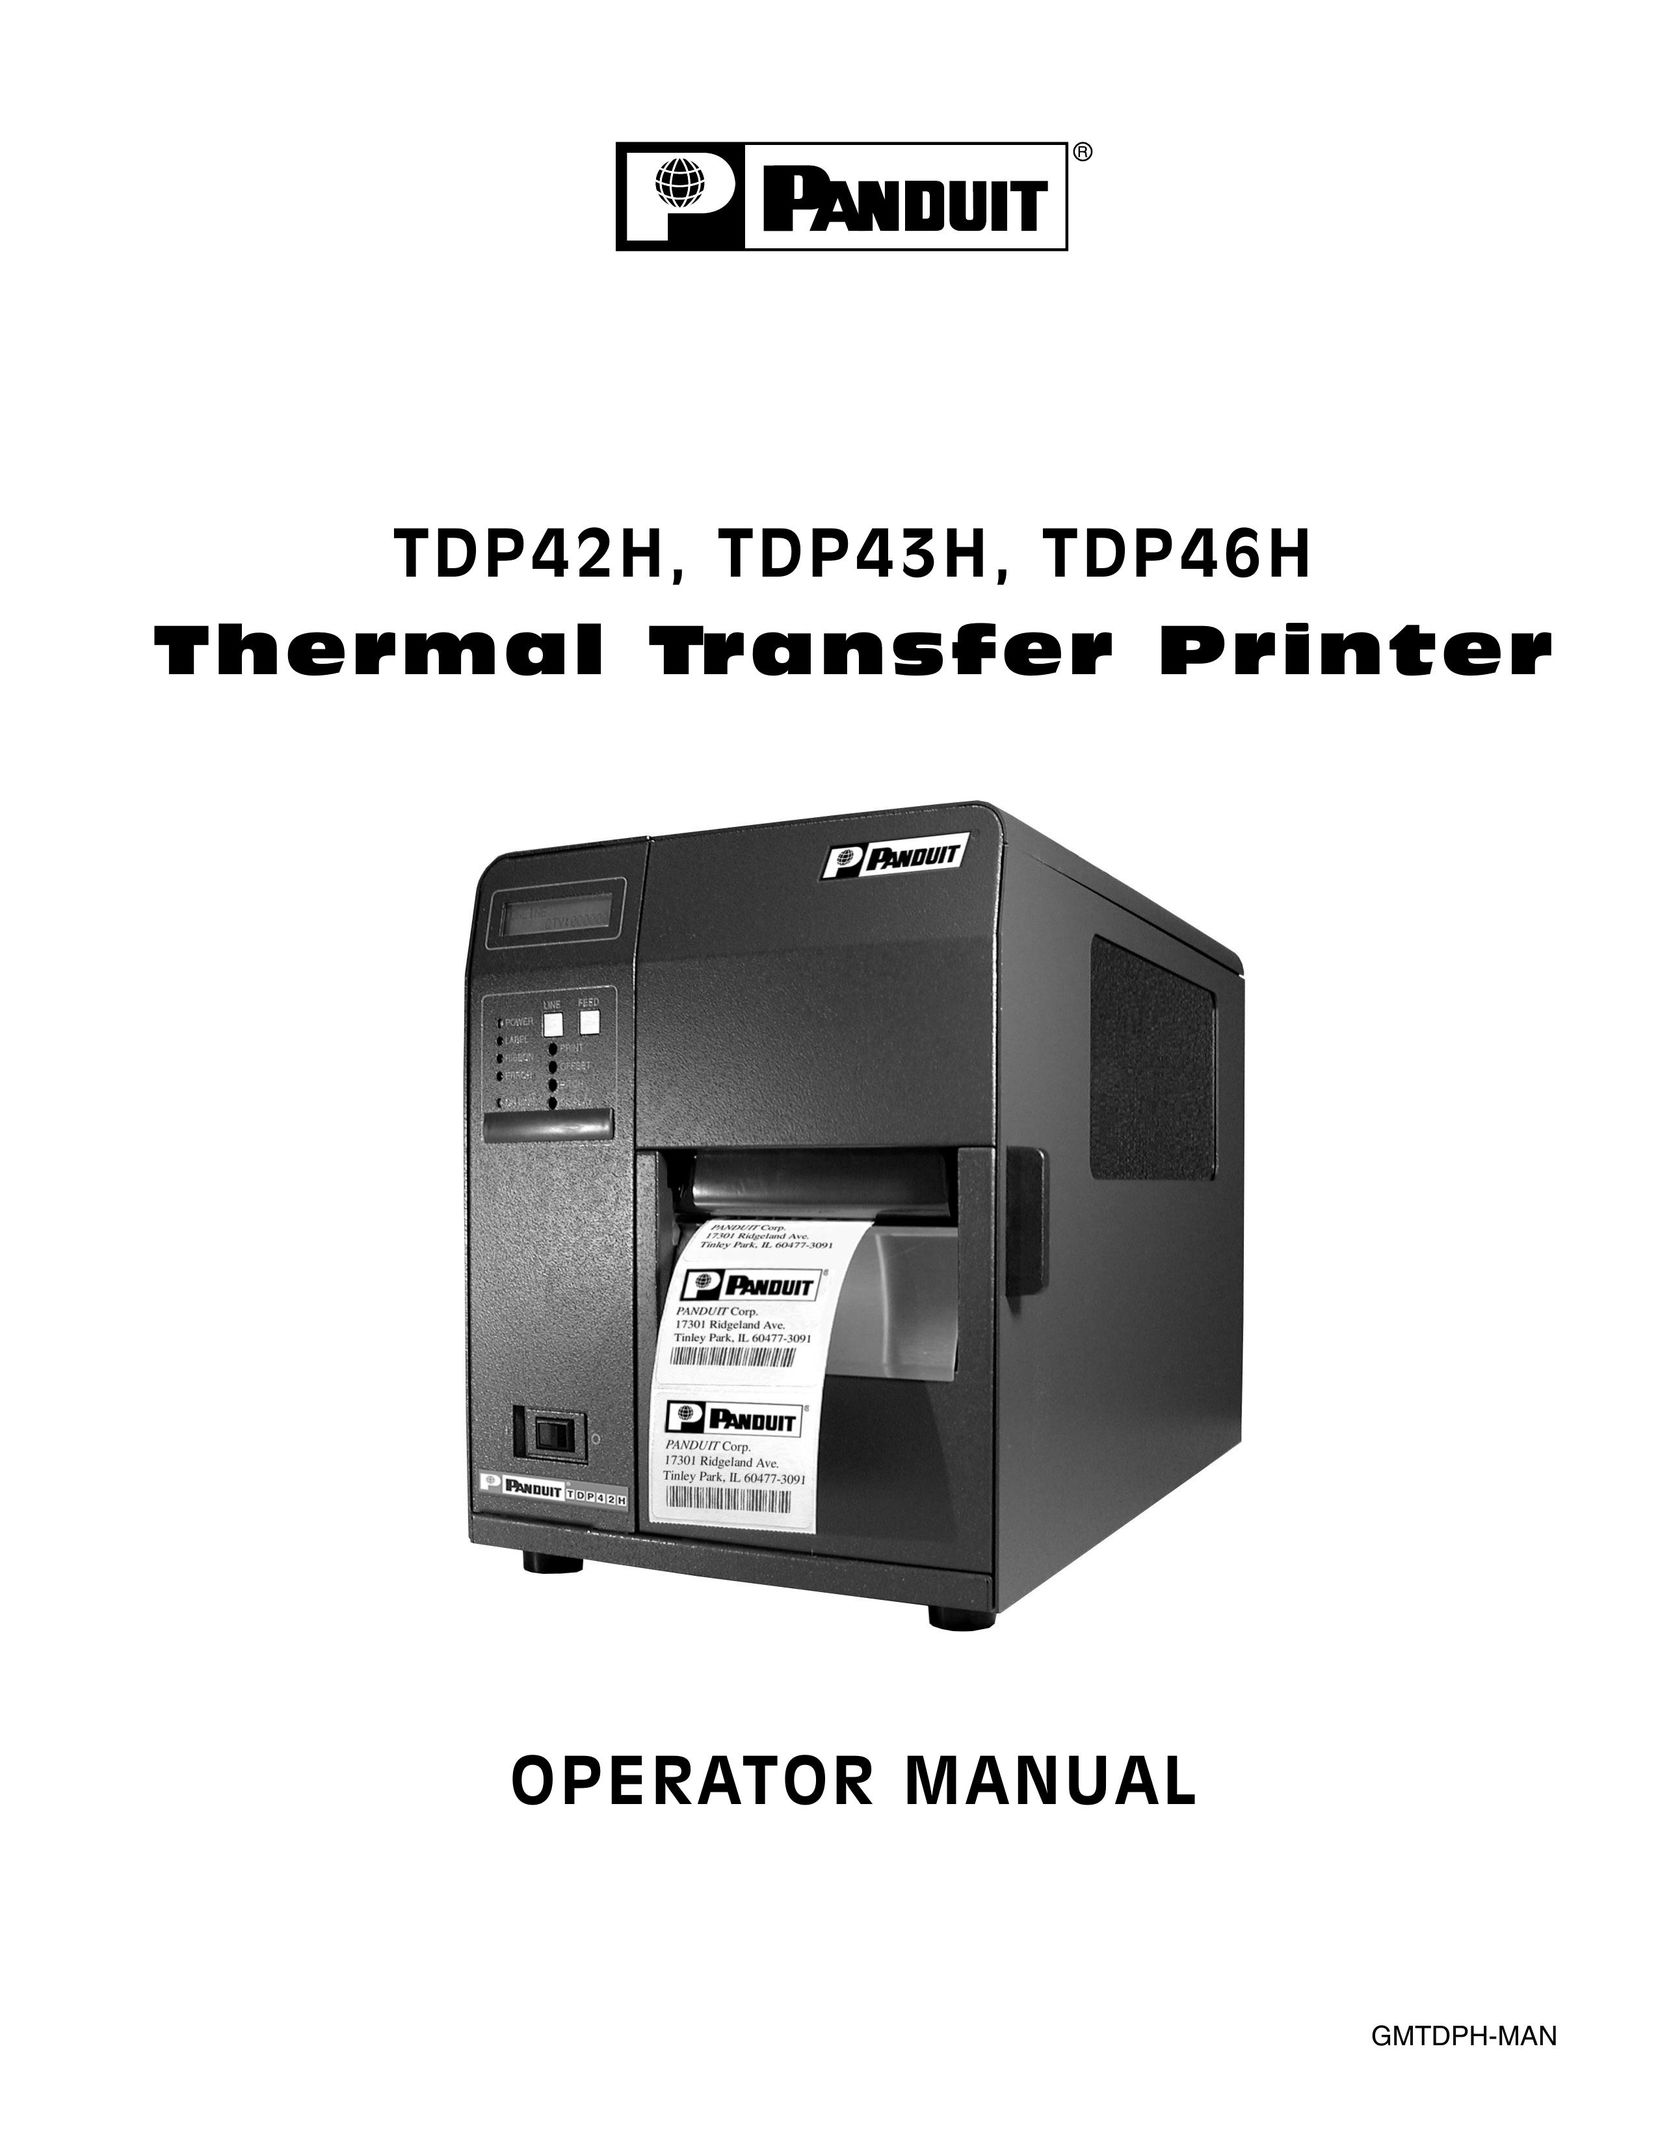 Panduit TDP42H Printer User Manual